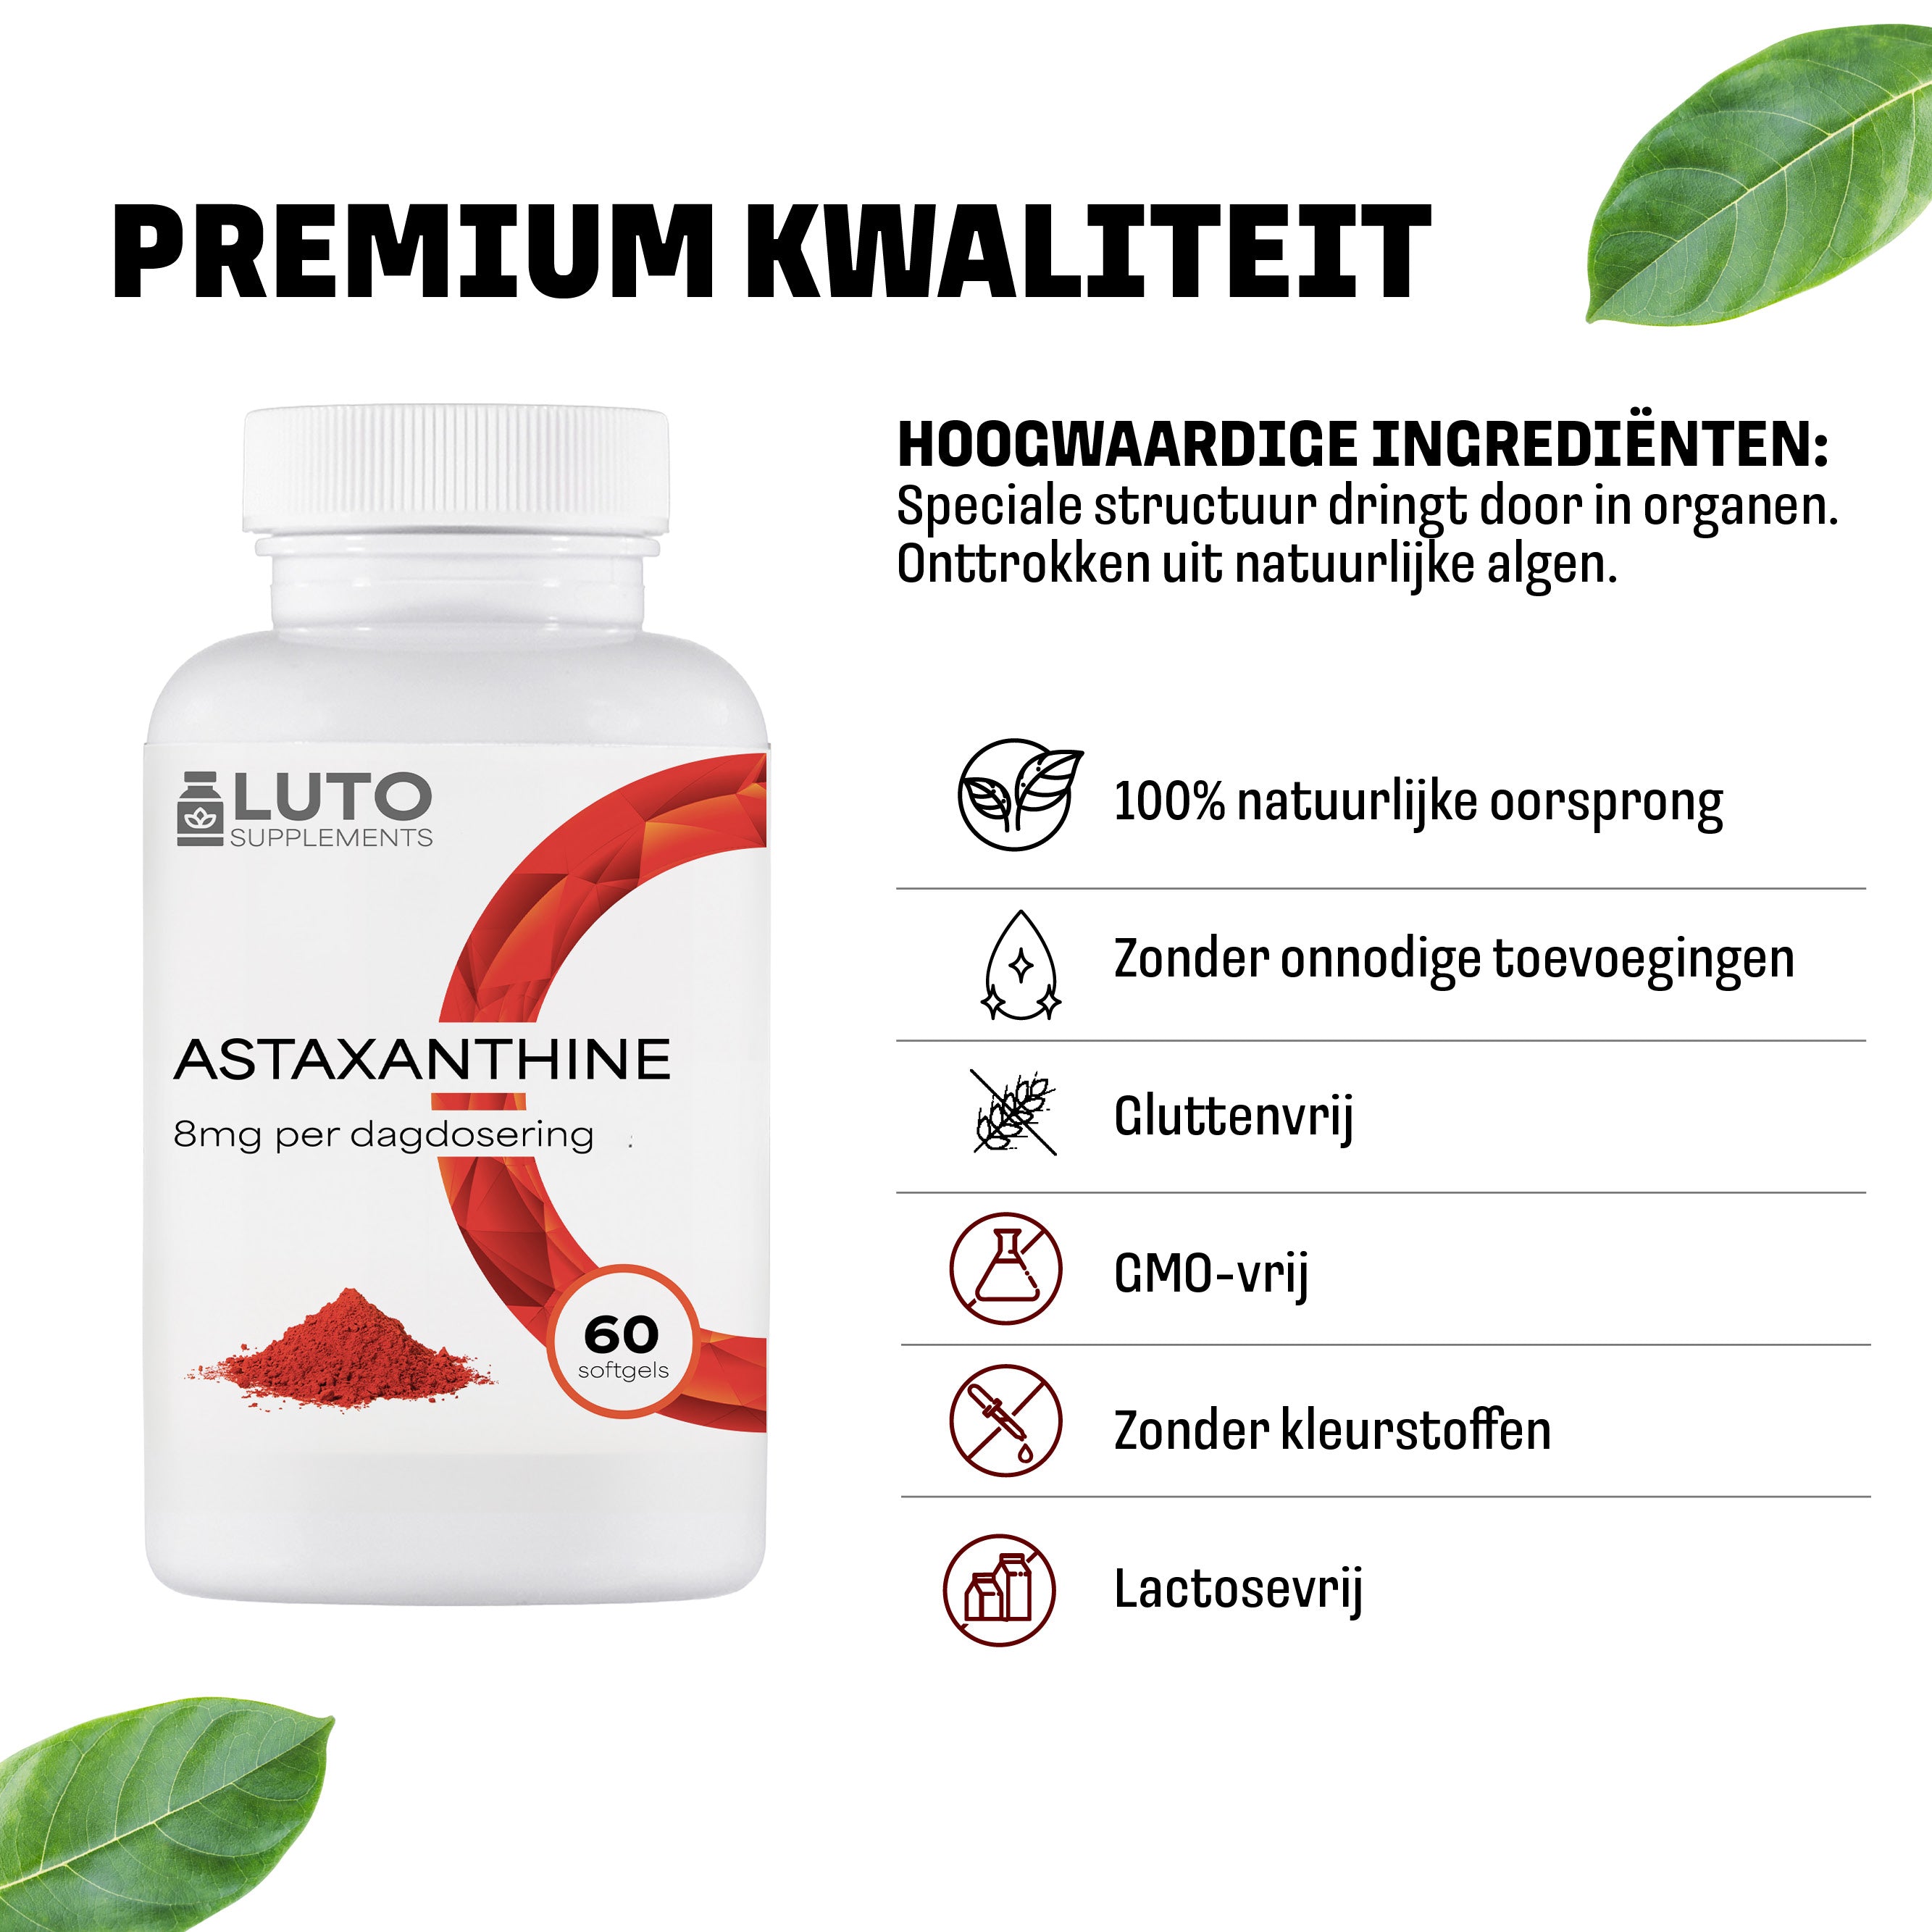 Astaxanthine 8 mg Depot | 60 softgel capsules | Uit zuivere Haematococcus Pluvialis microalgen | AstraReal & Vitamine E | Luto Supplements